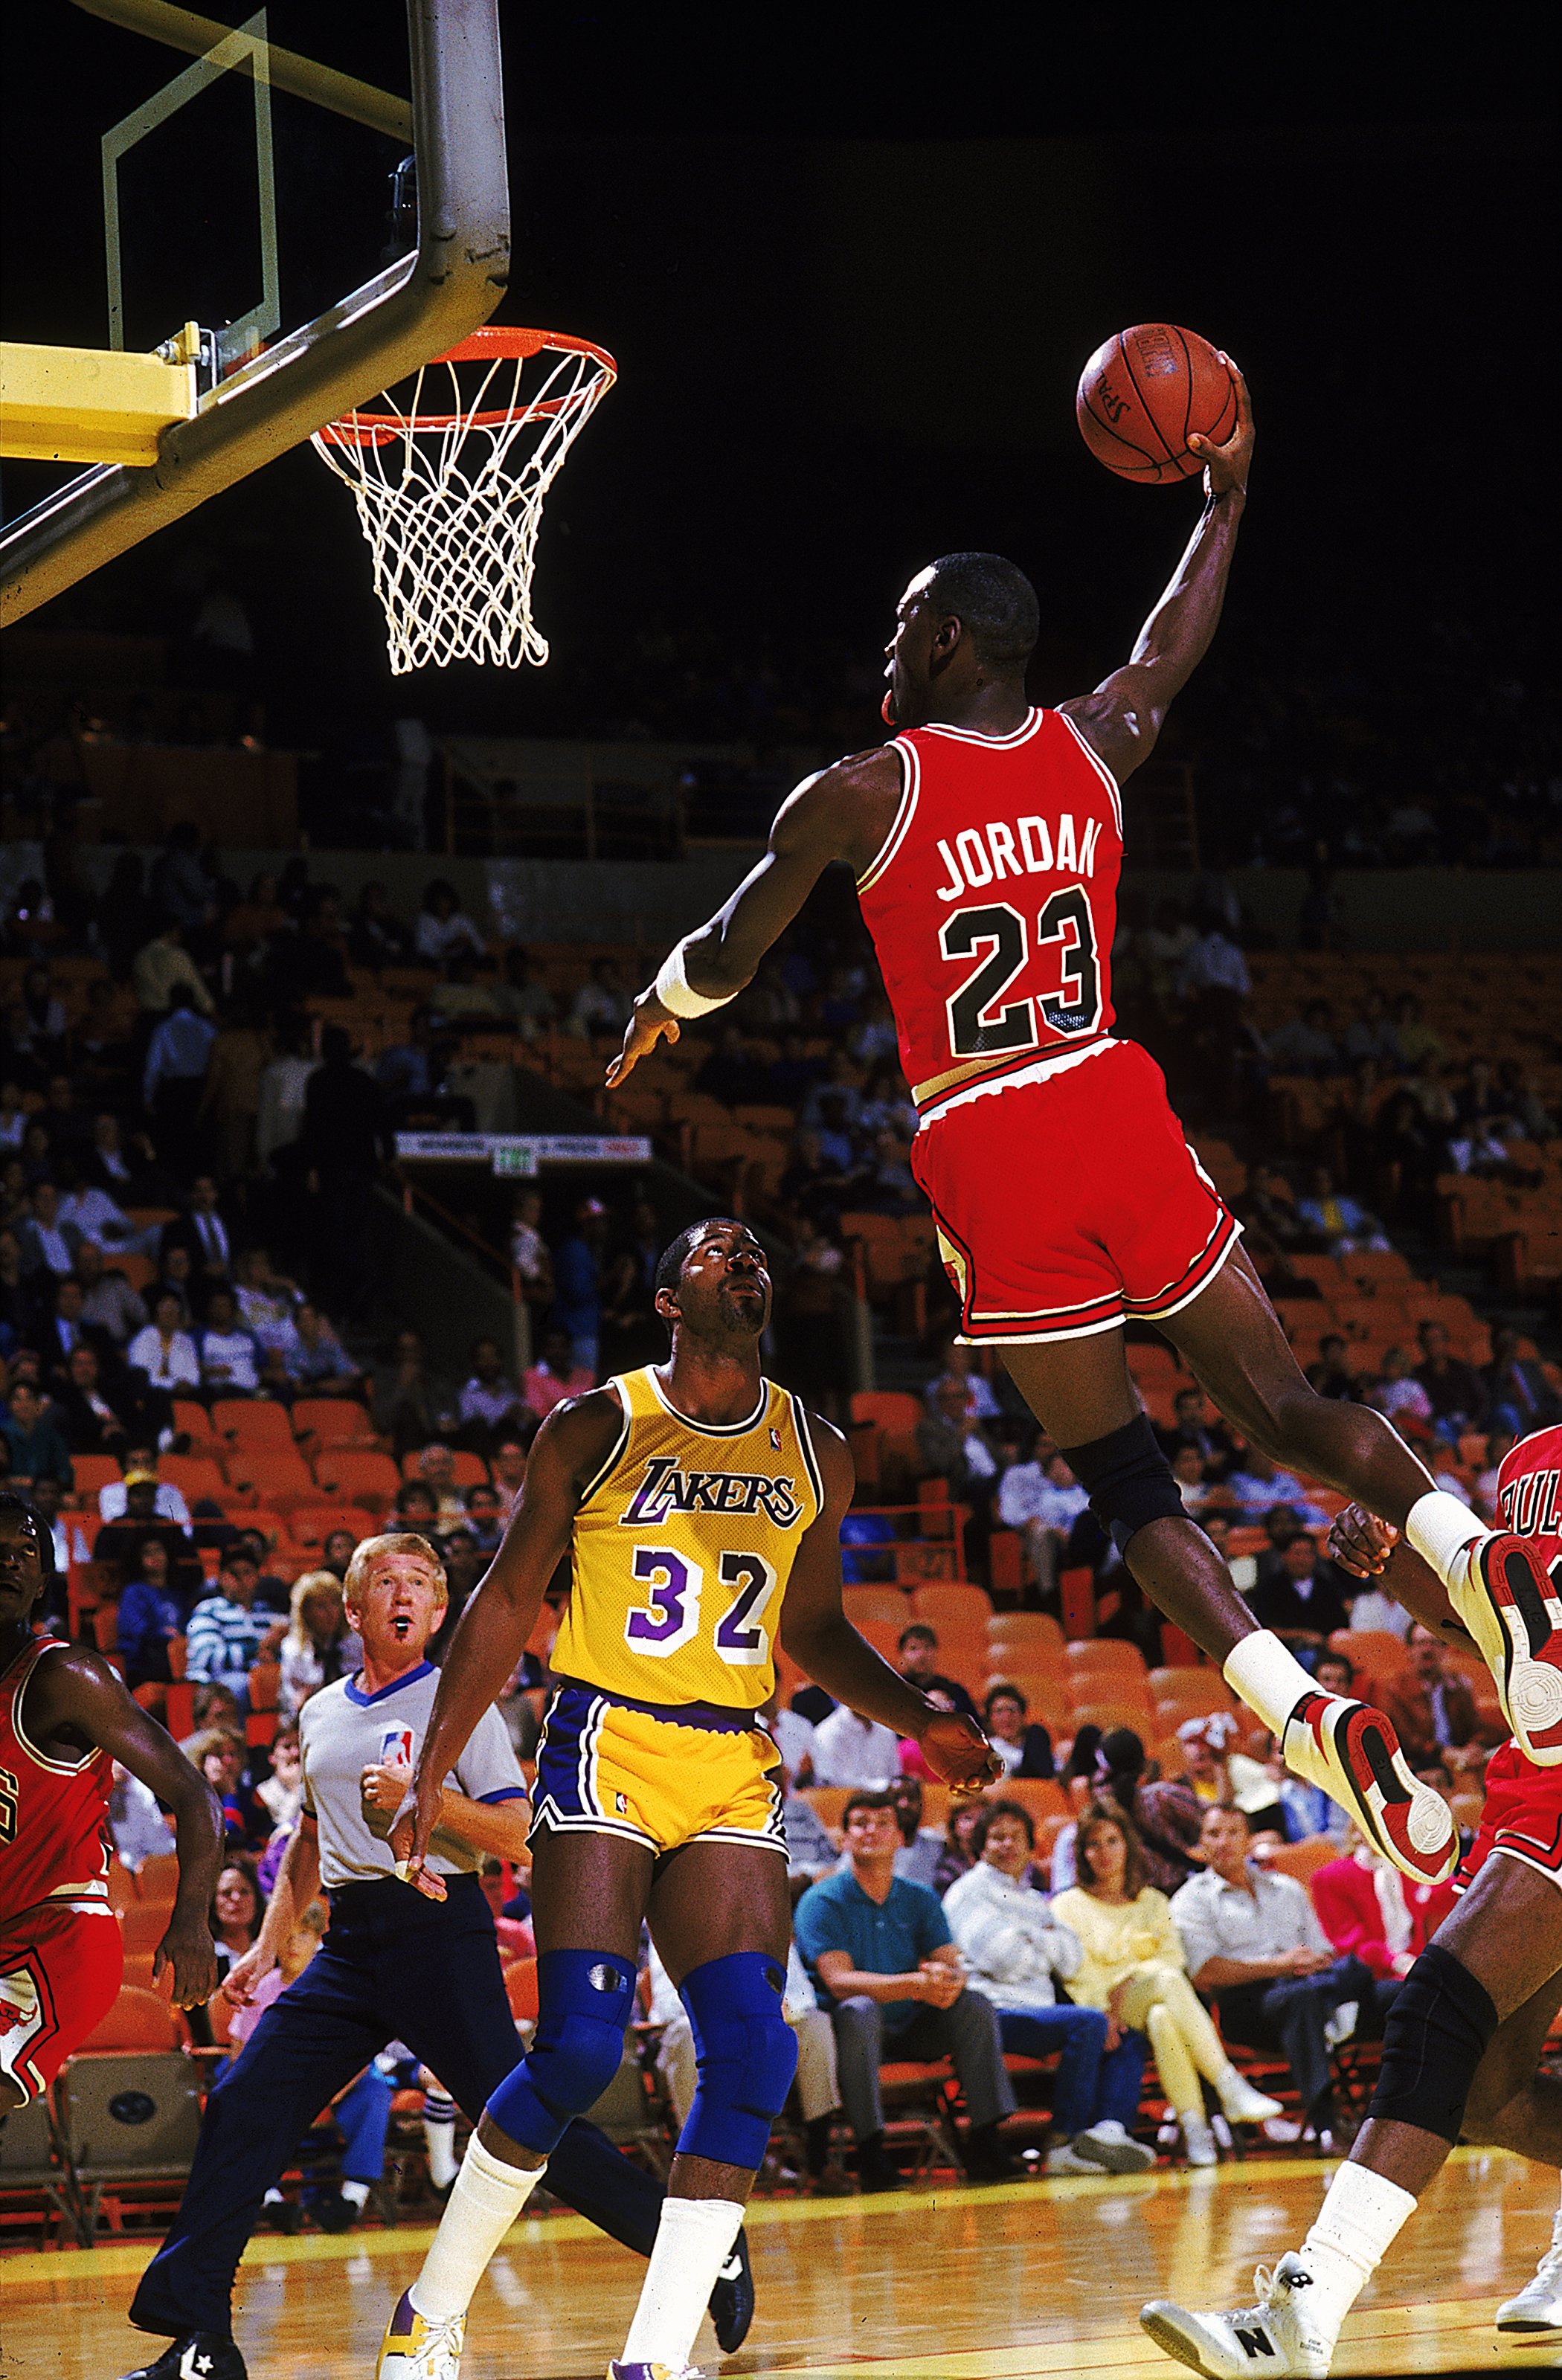 Michael Jordan: Breaking News, Rumors & Highlights